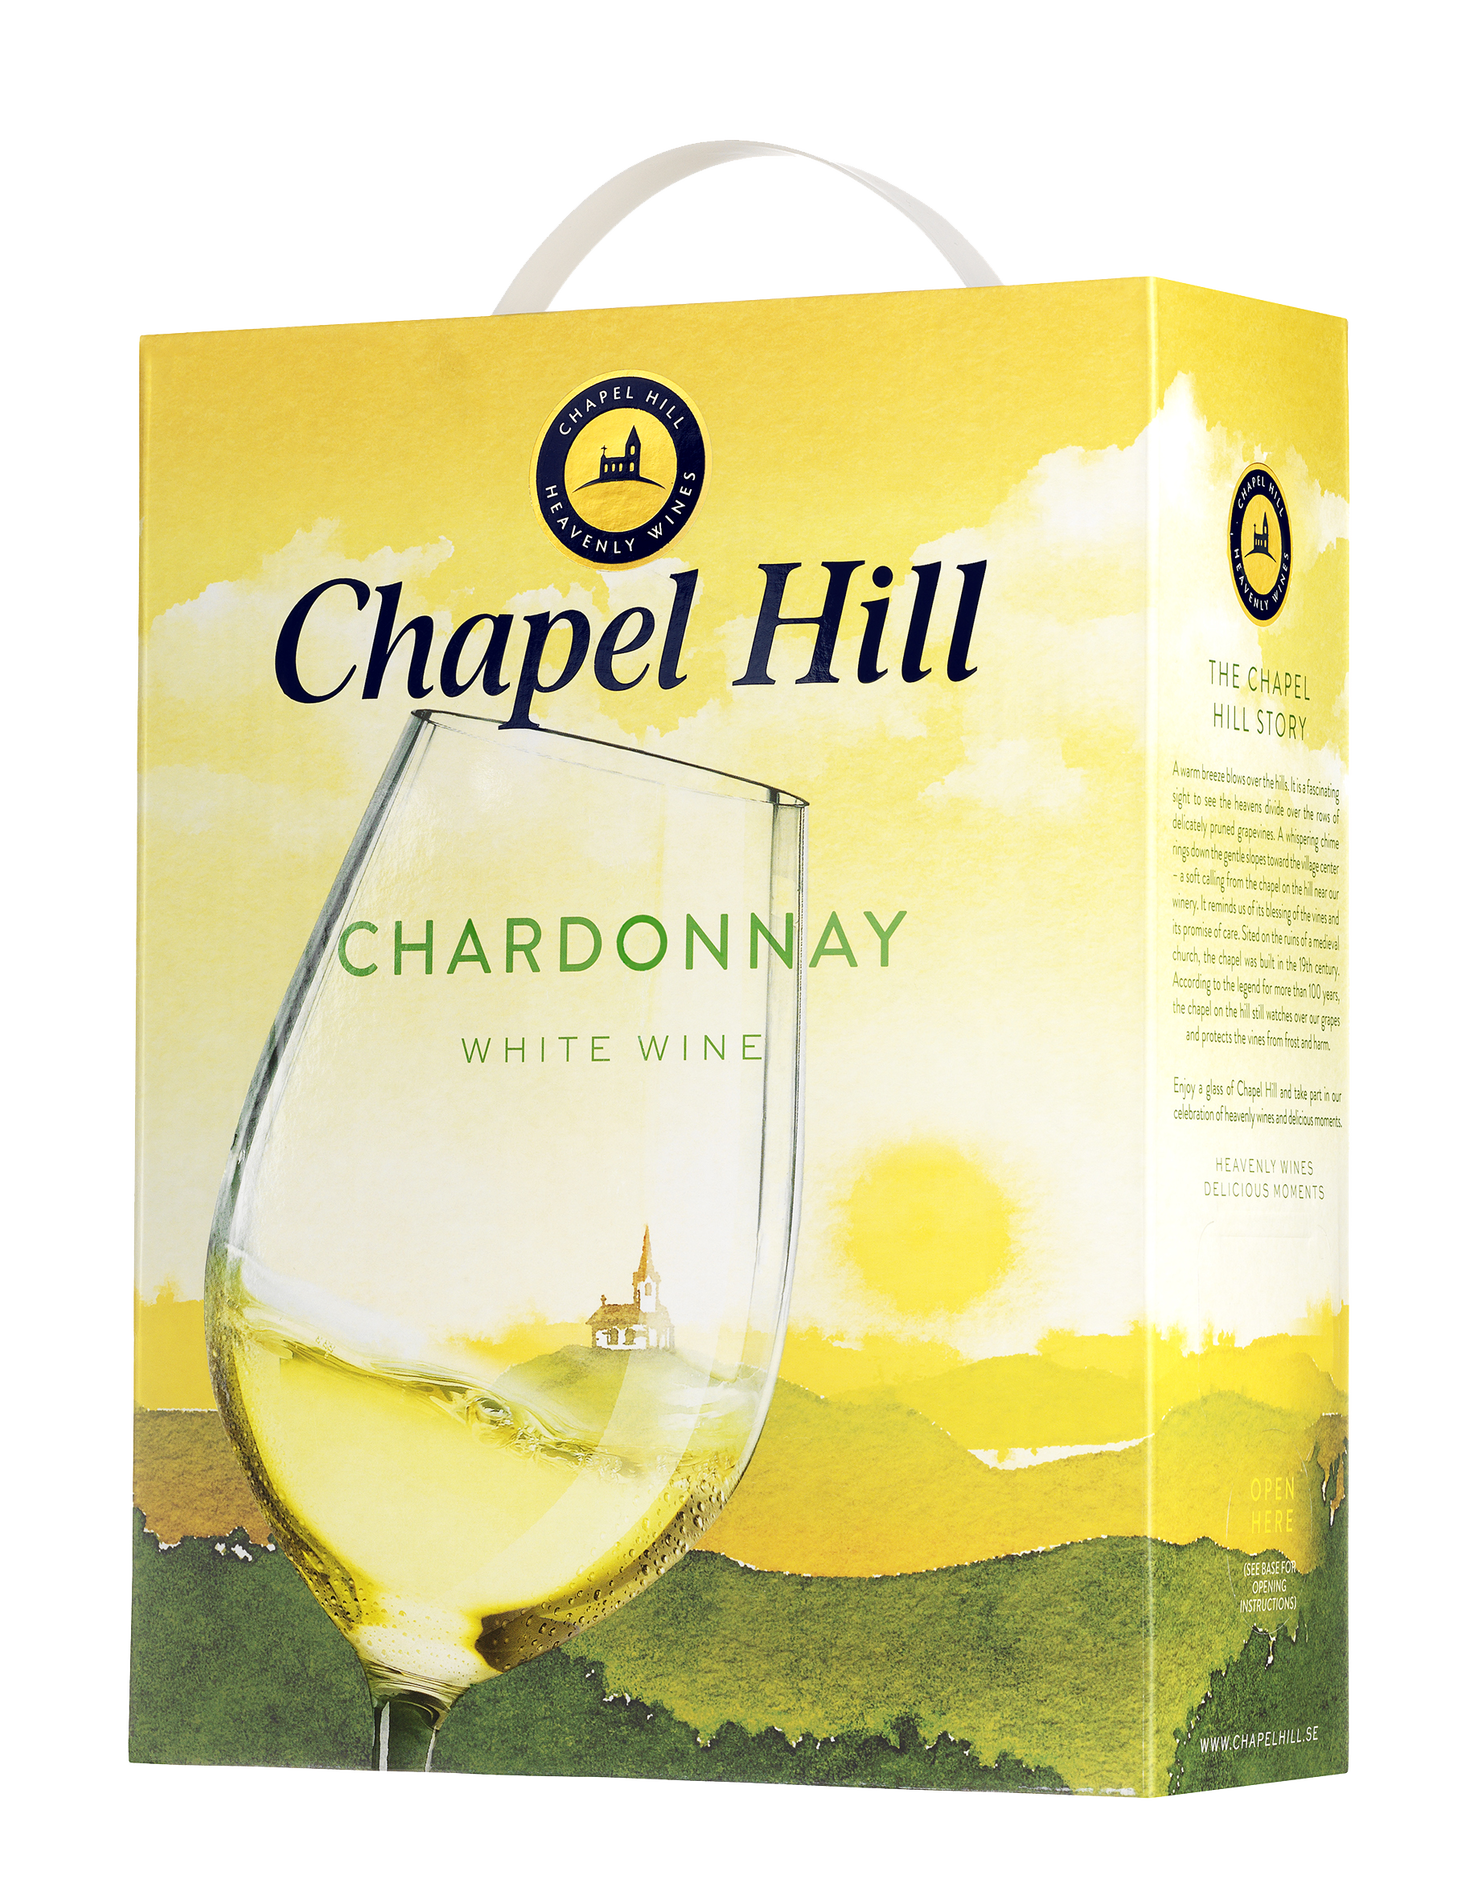 Chapel Hill Bag in Box Chardonnay